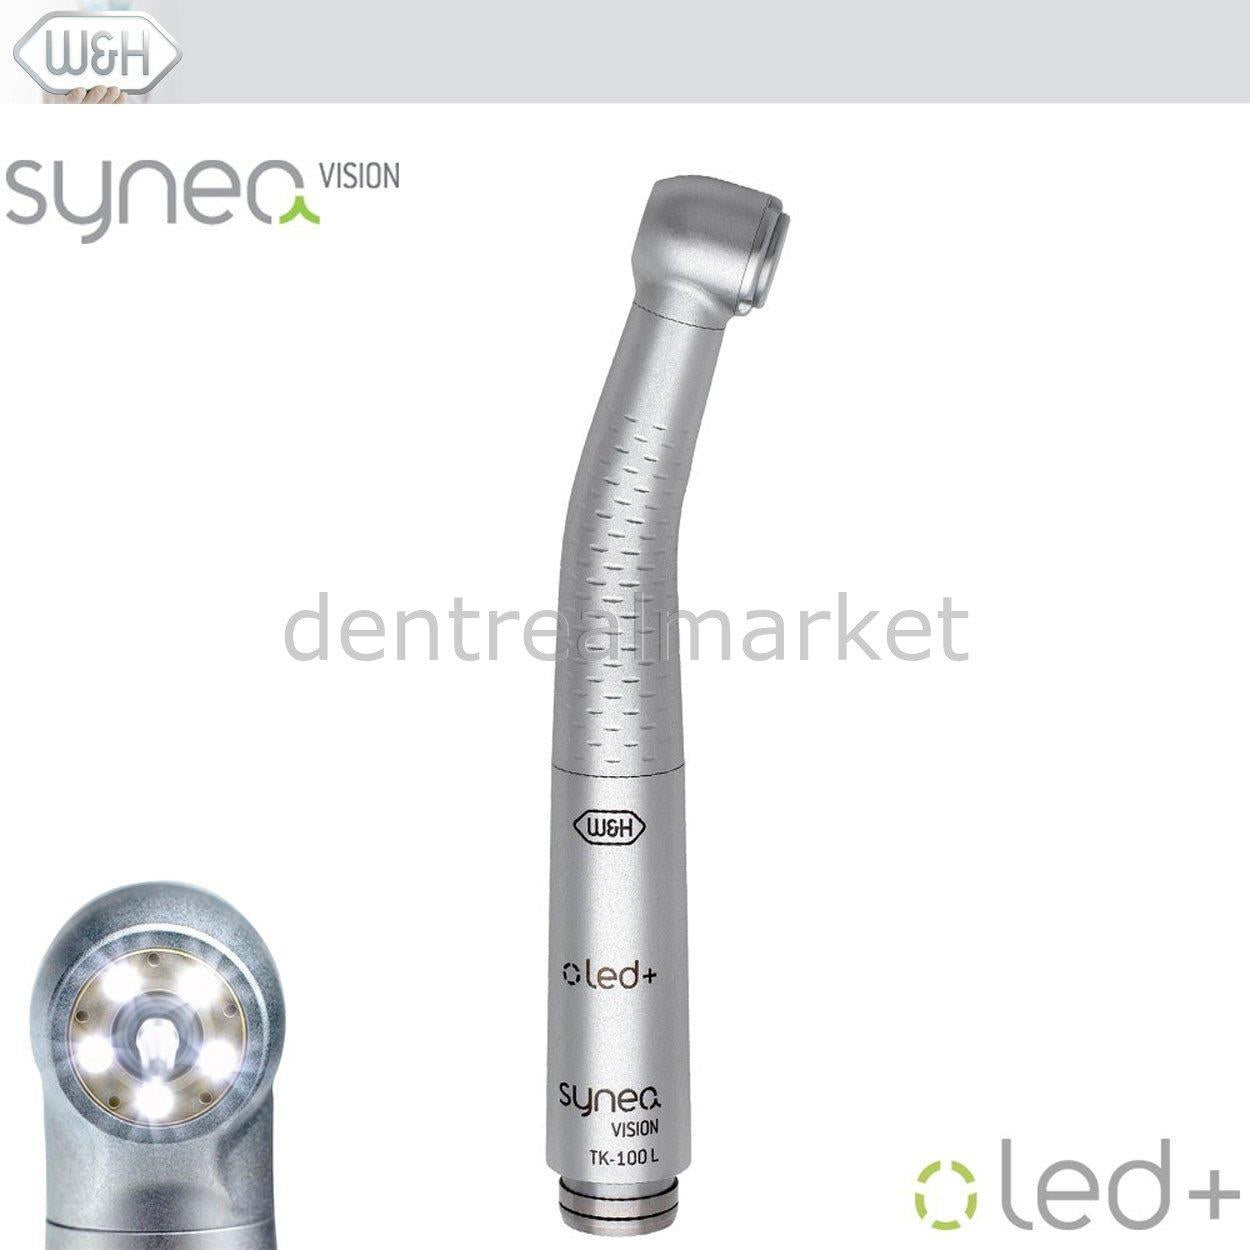 DentrealStore - W&H Dental TK-100-L Synea Vision Turbine - LED+ Optic Ring